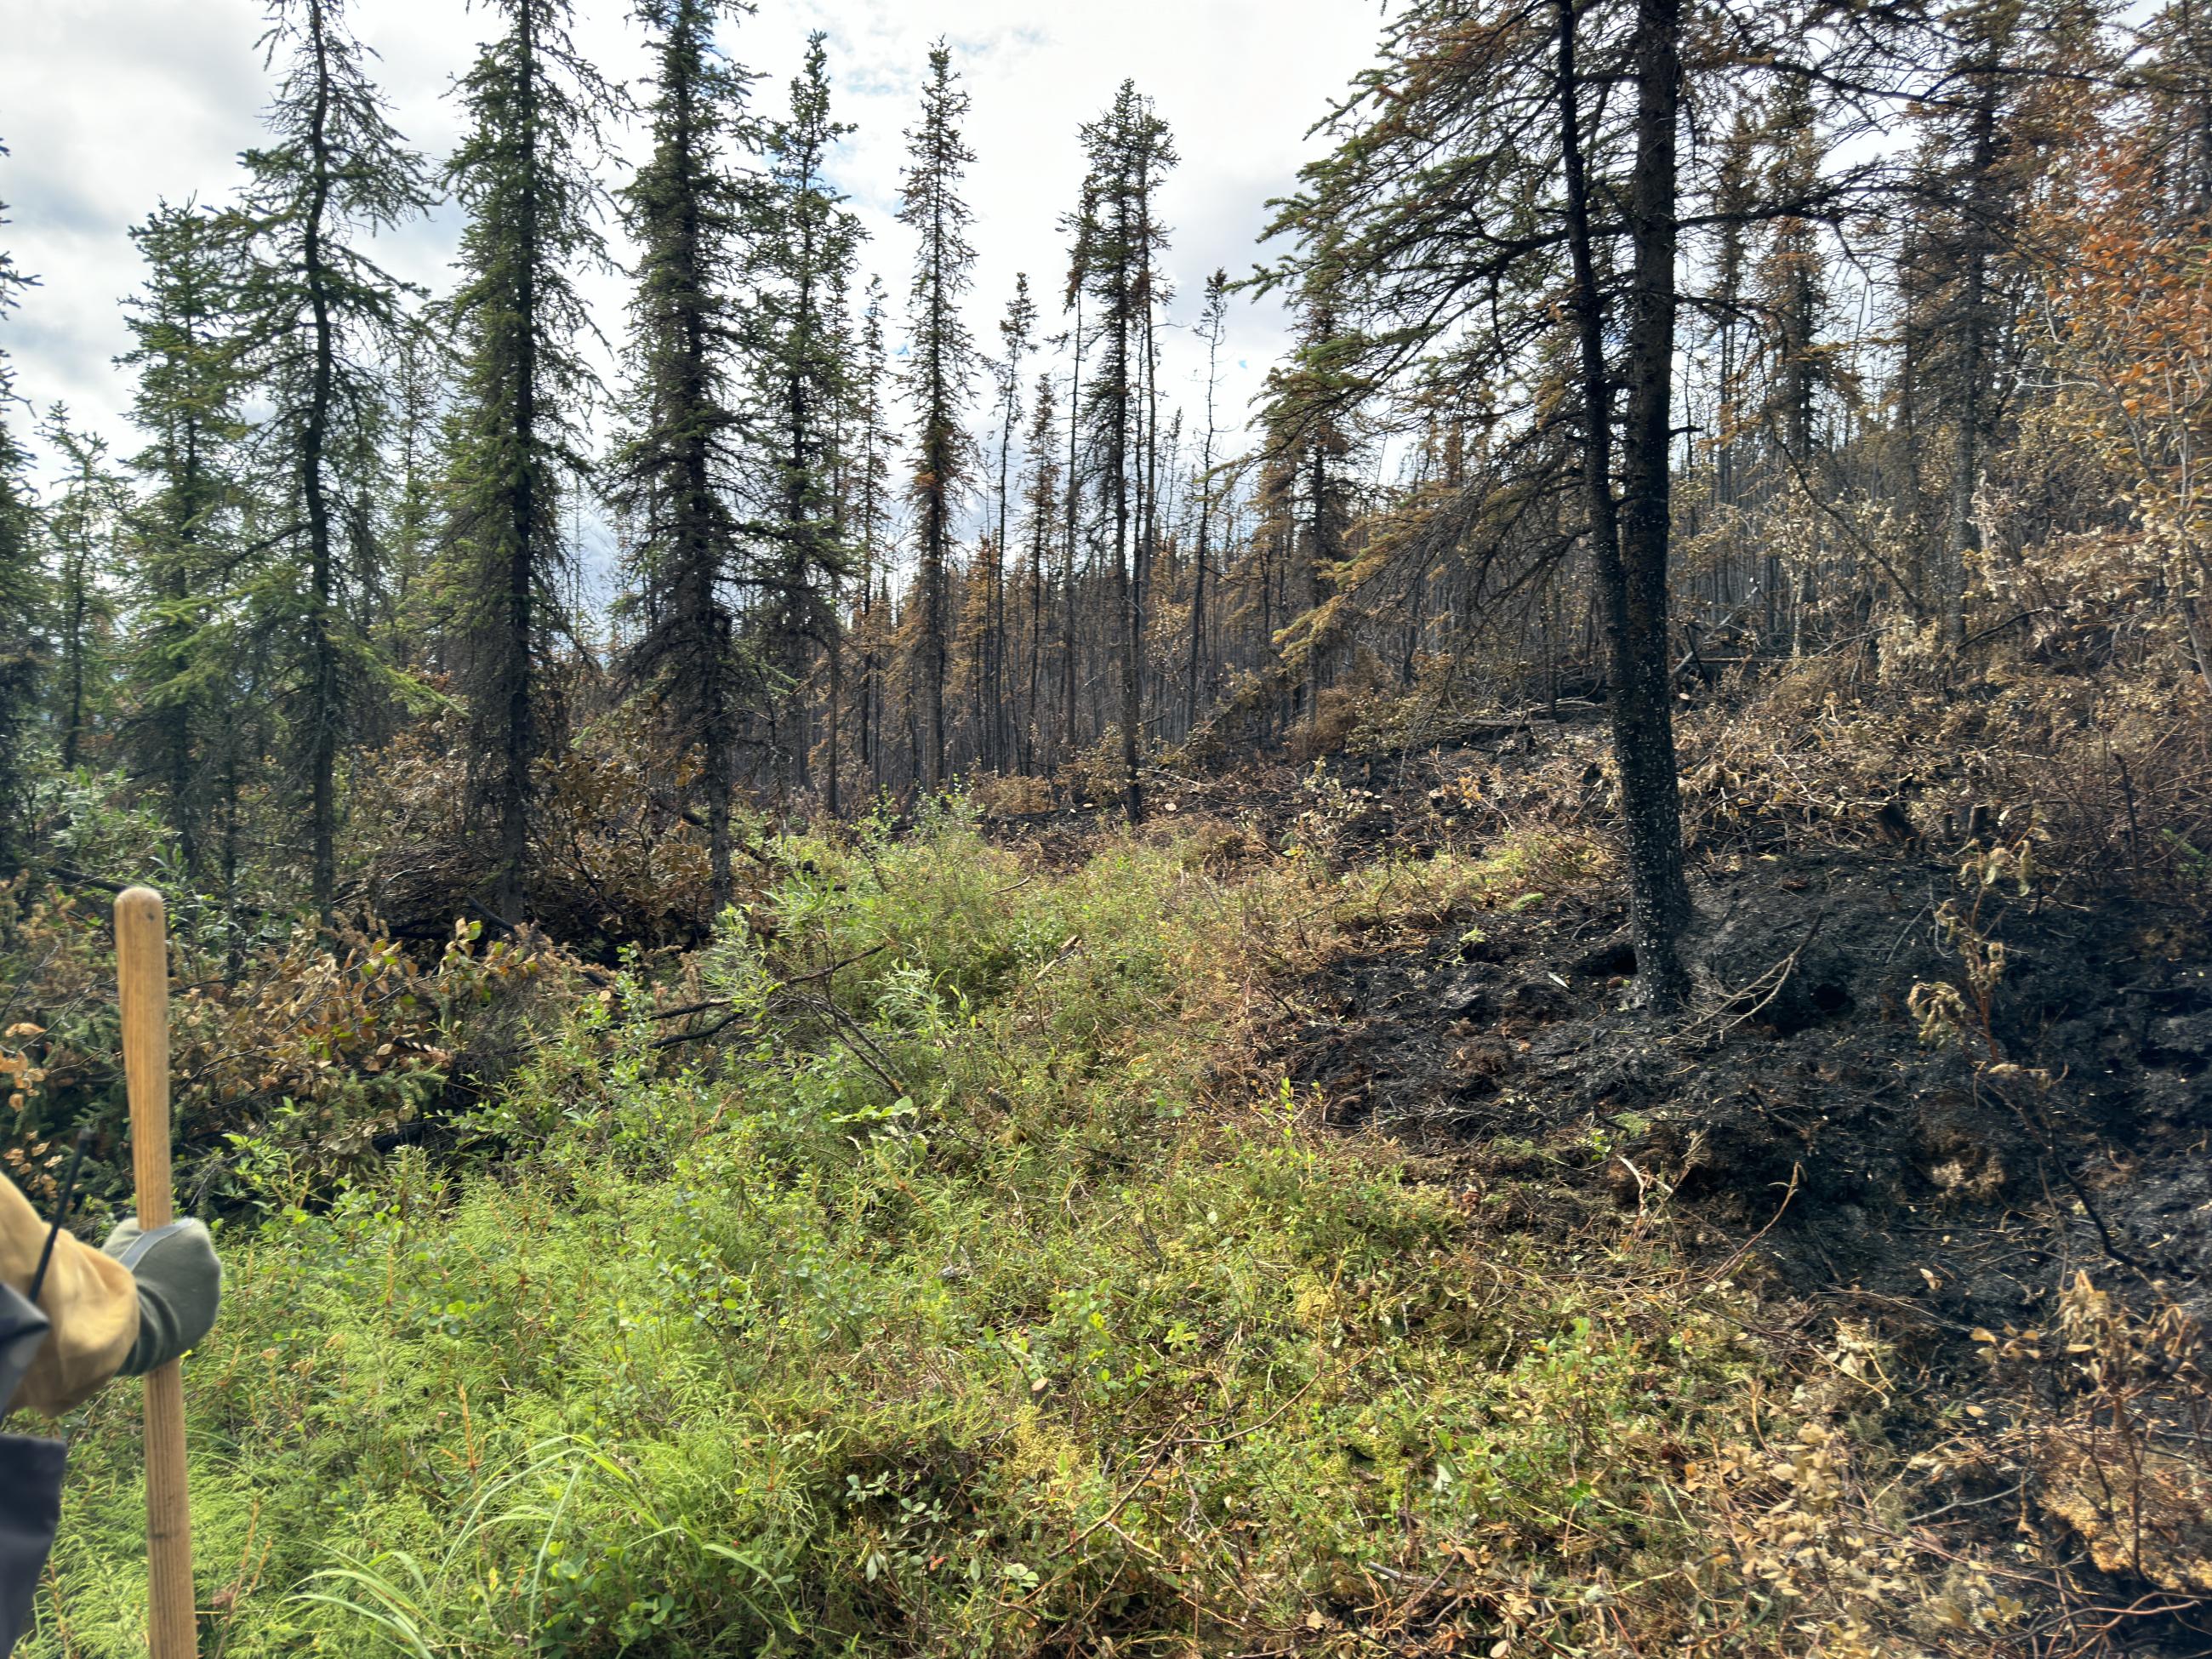 Green vegetation in a burned area.